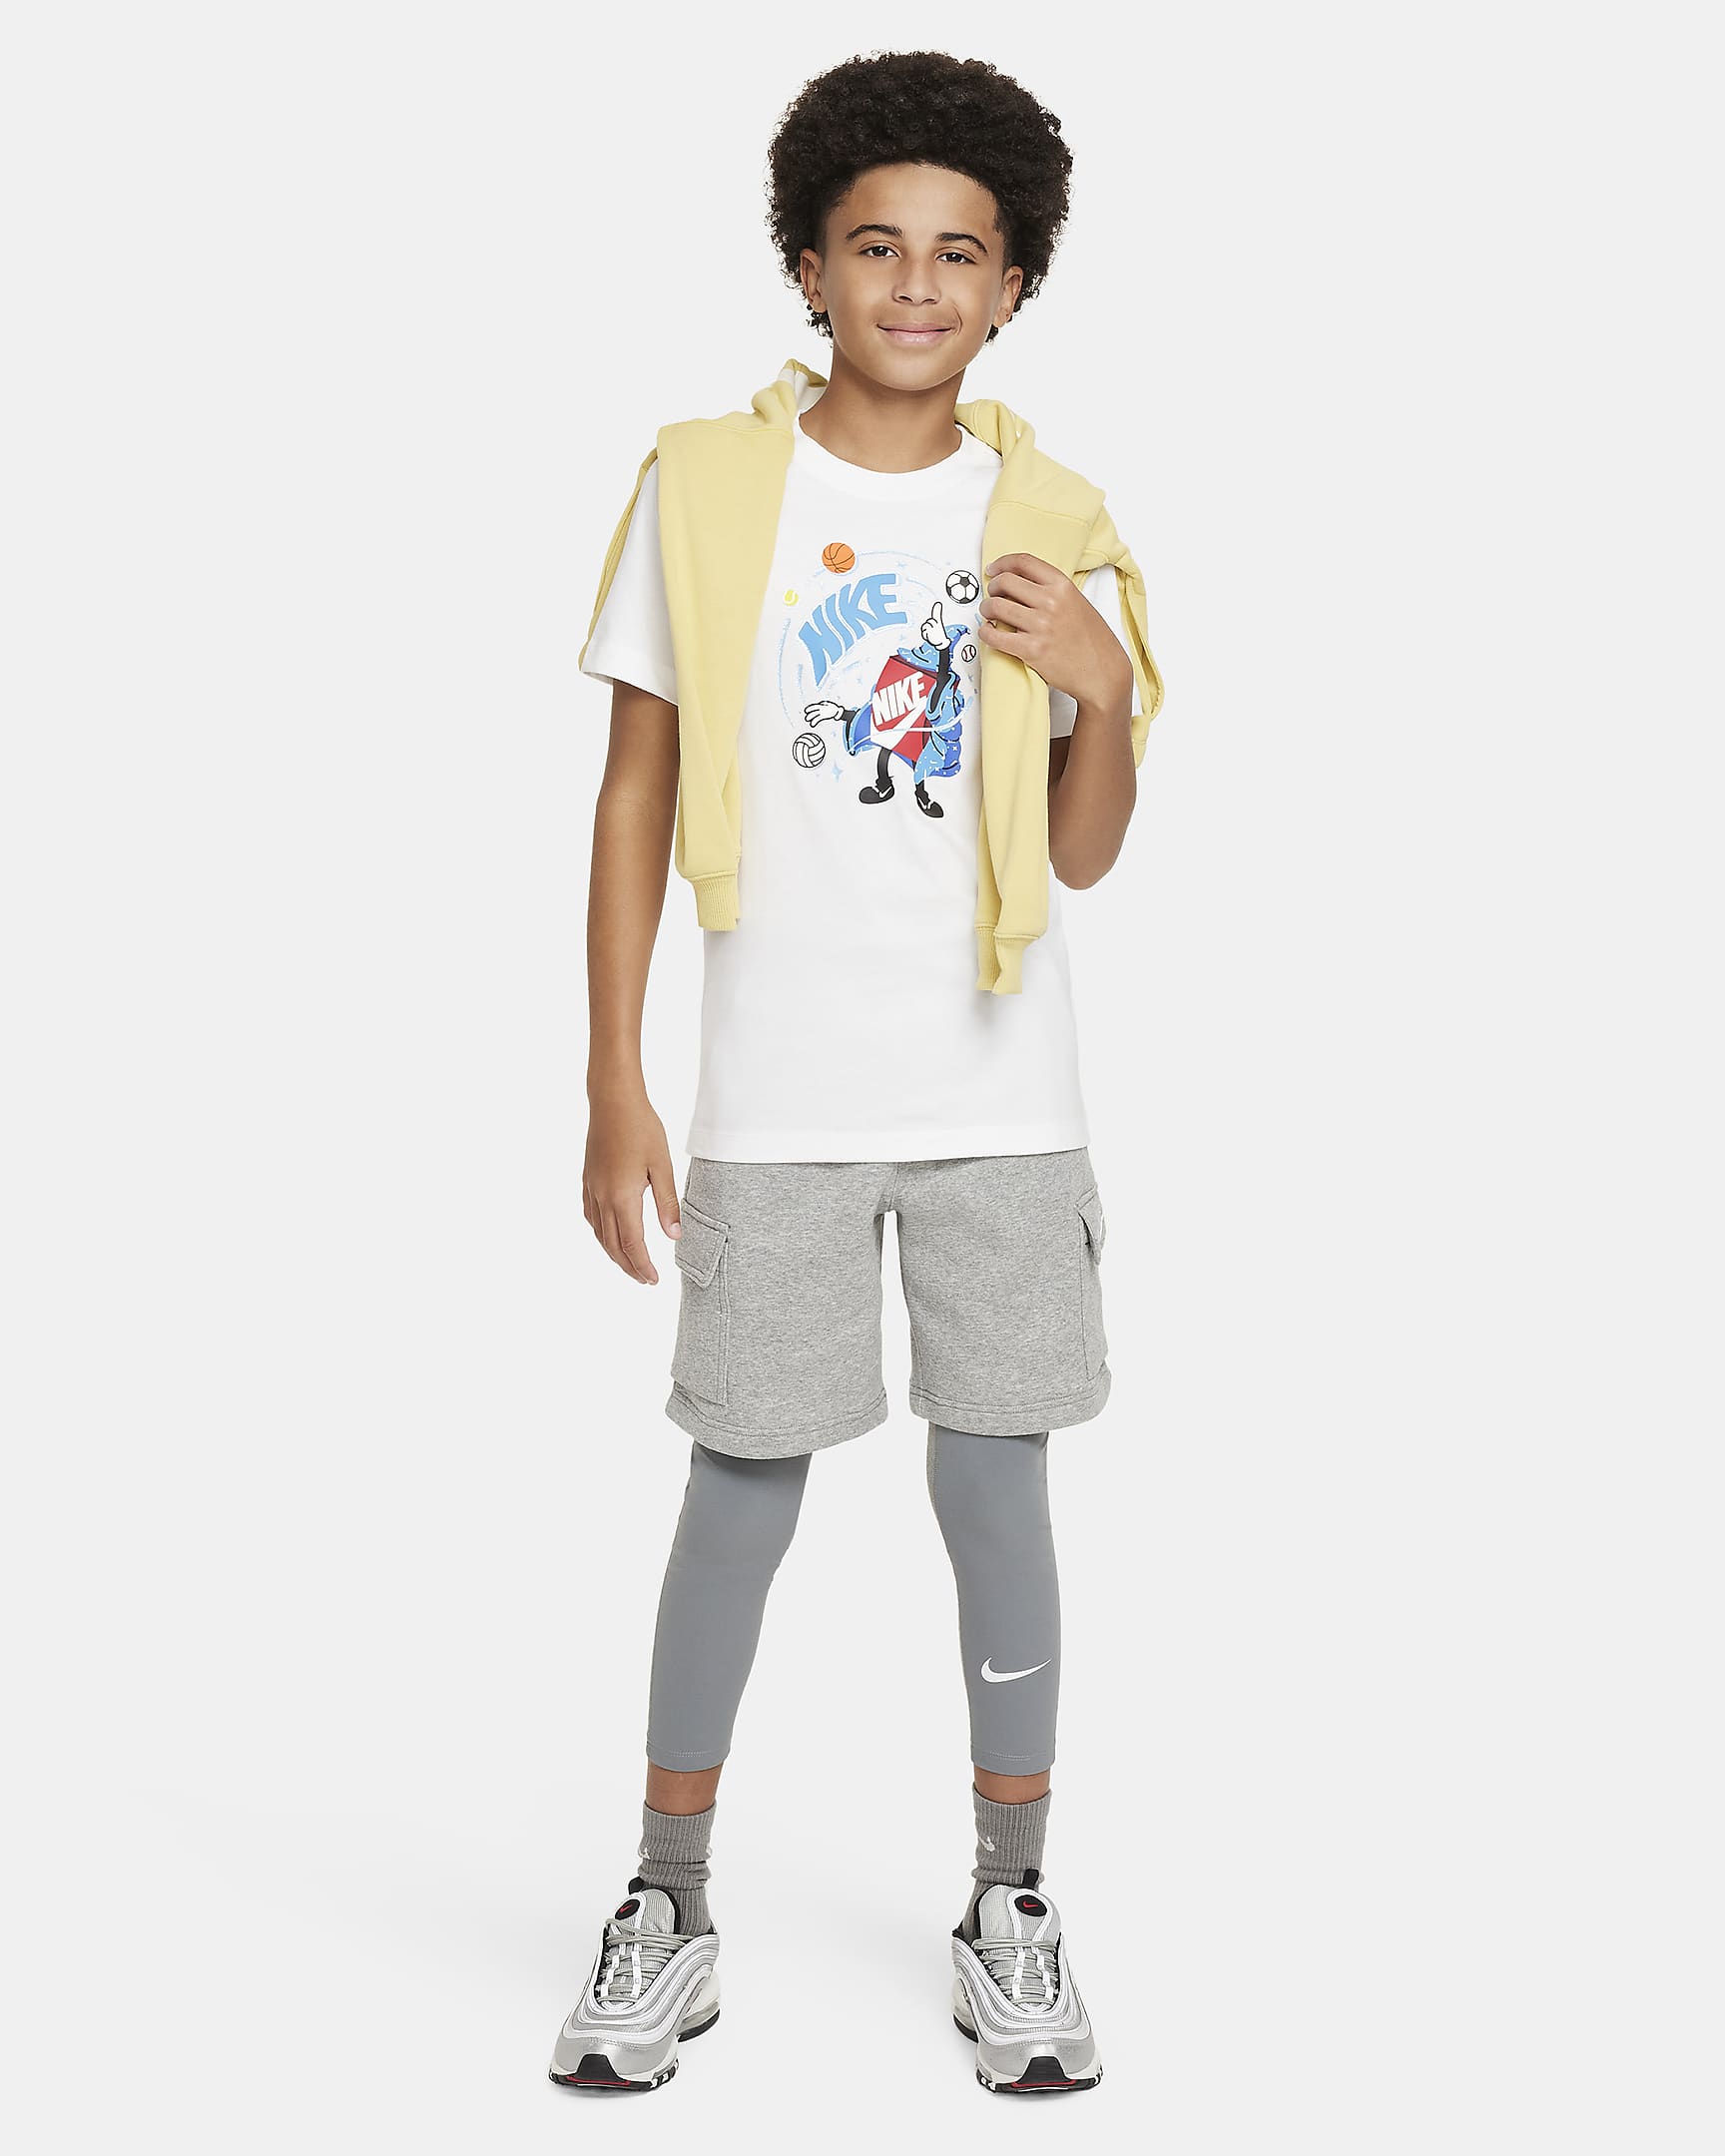 Nike Sportswear Older Kids' T-Shirt. Nike AU